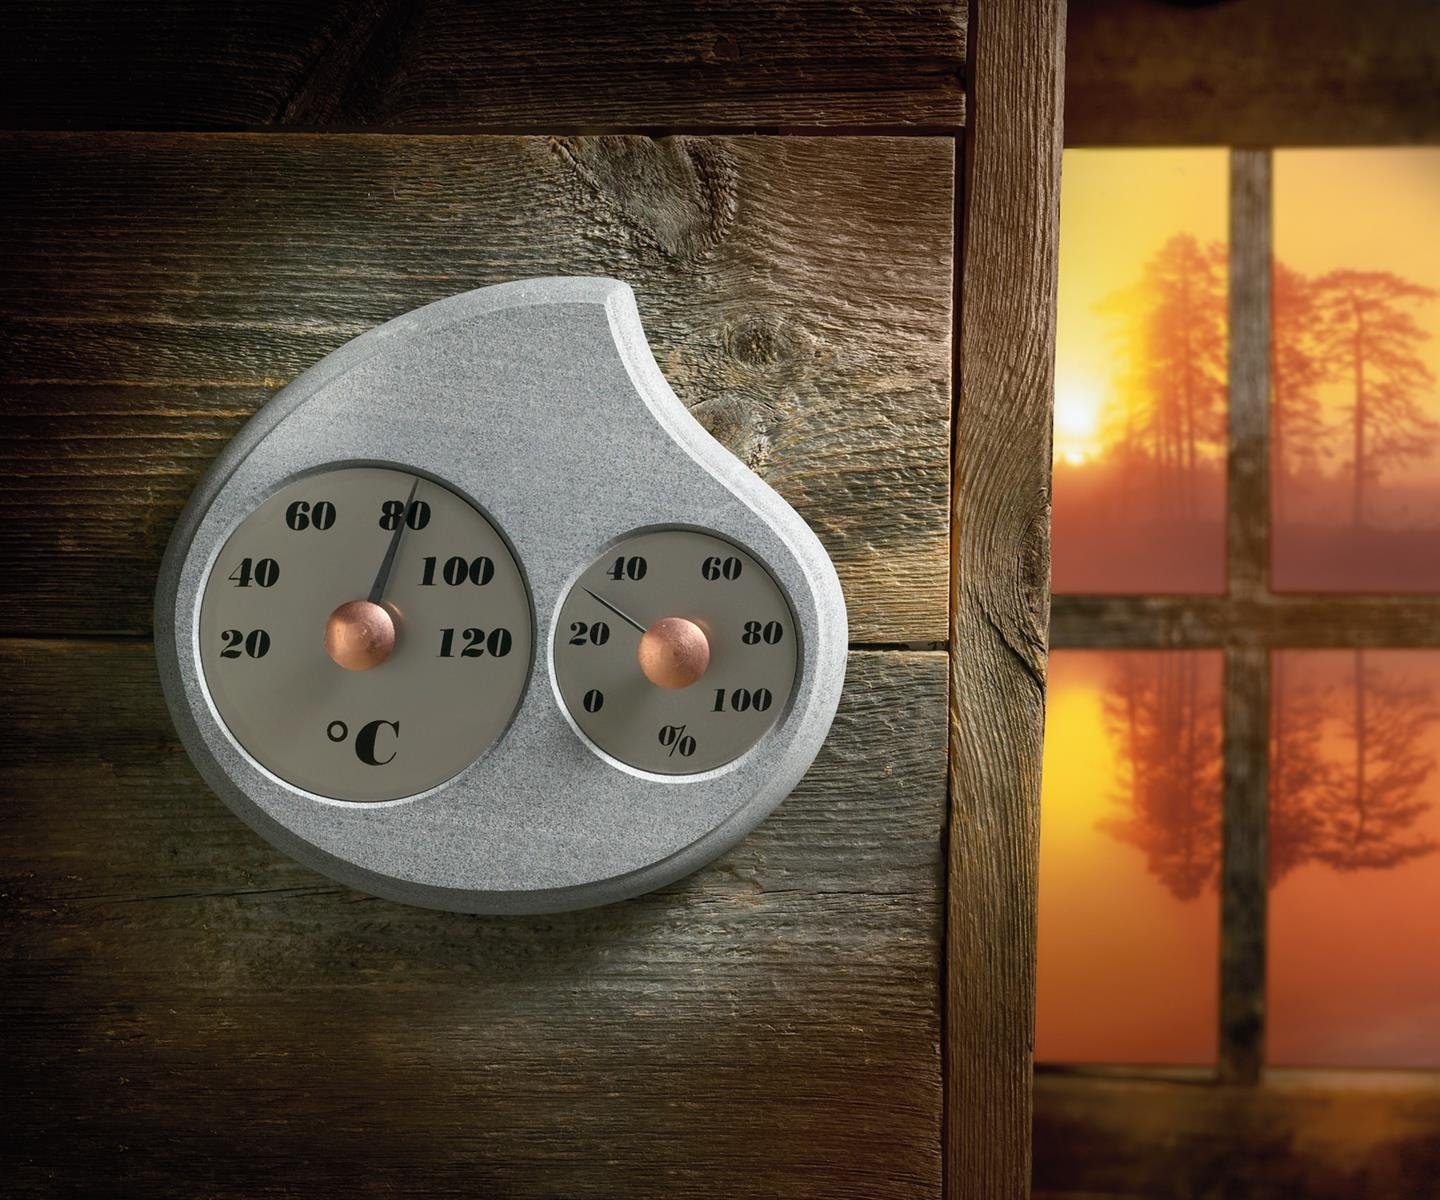 Wellnessmax Finlax Maininki Sauna-Sanduhr Hygro/Thermometer